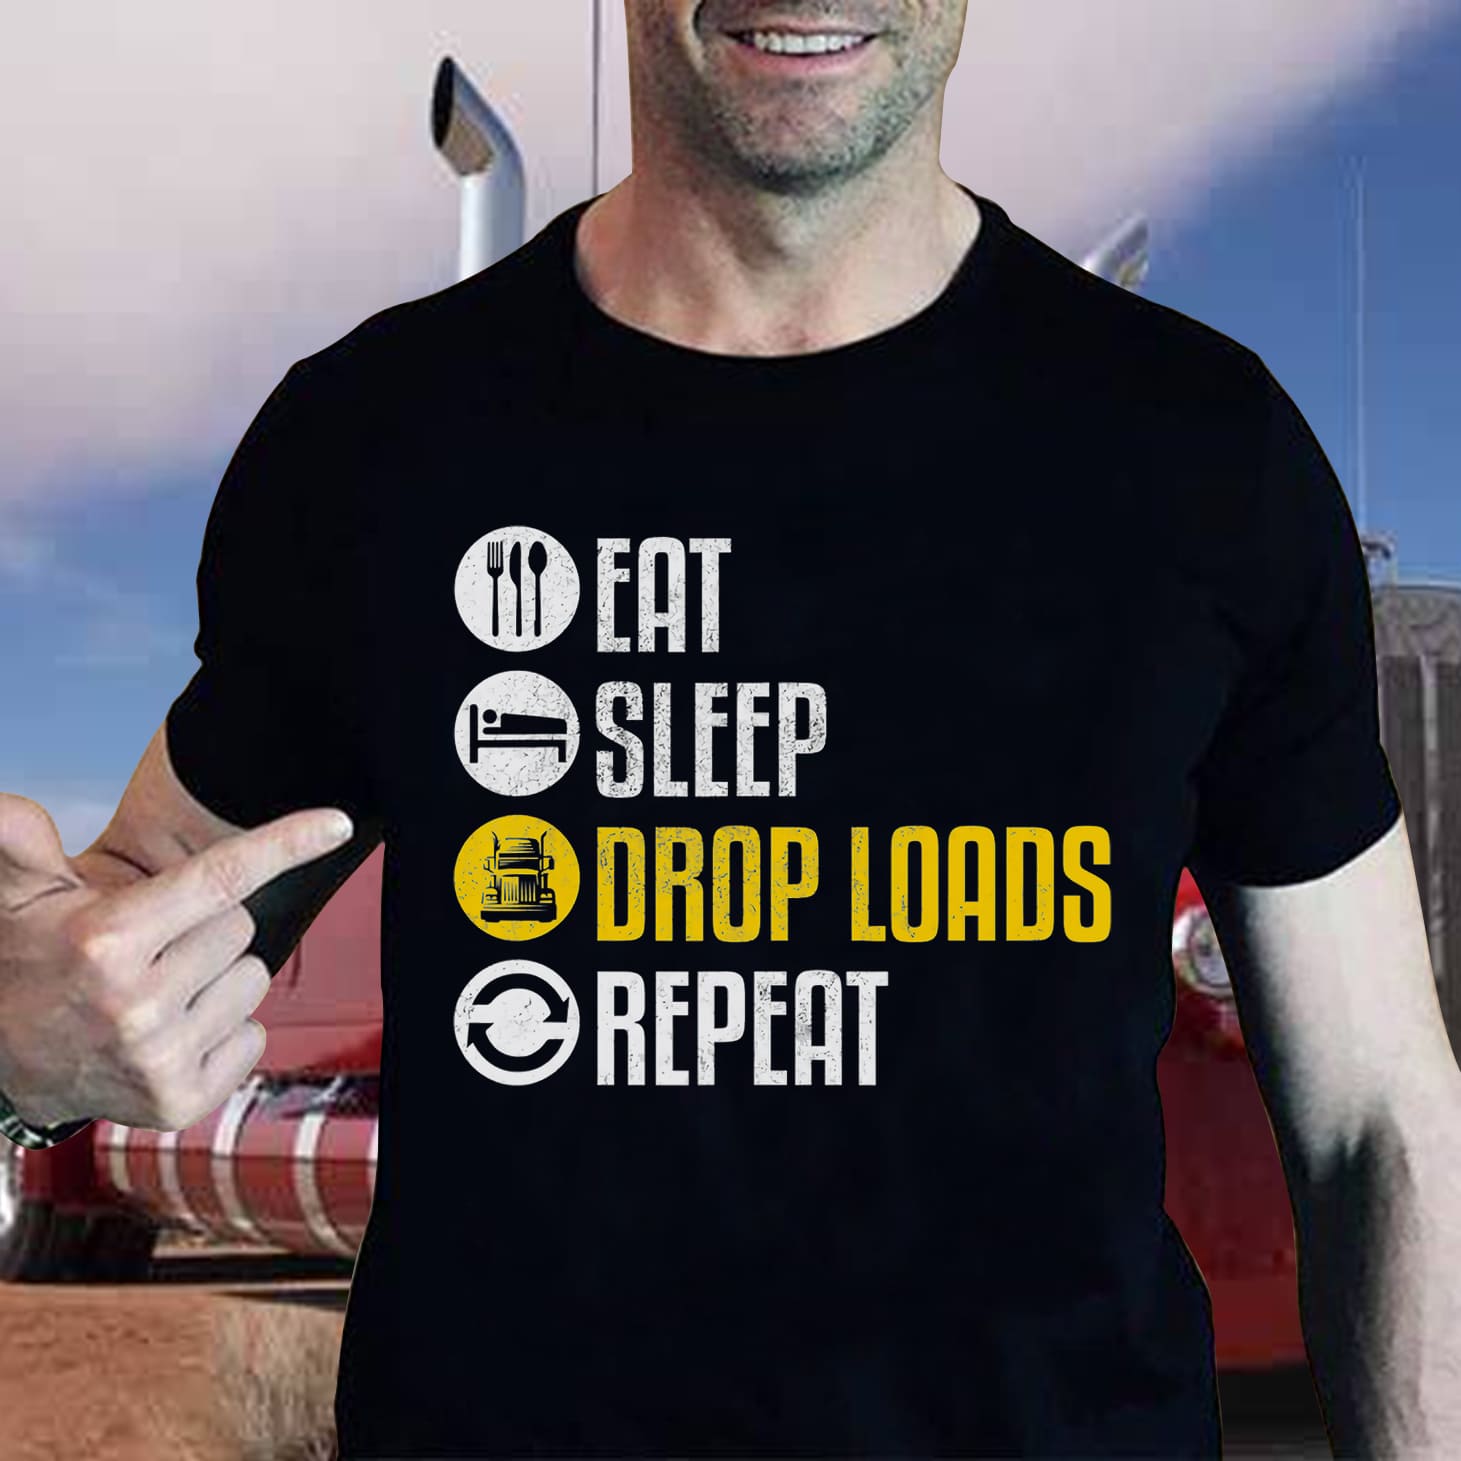 Truck Driver Shirt - Eat sleep drop loads repeat